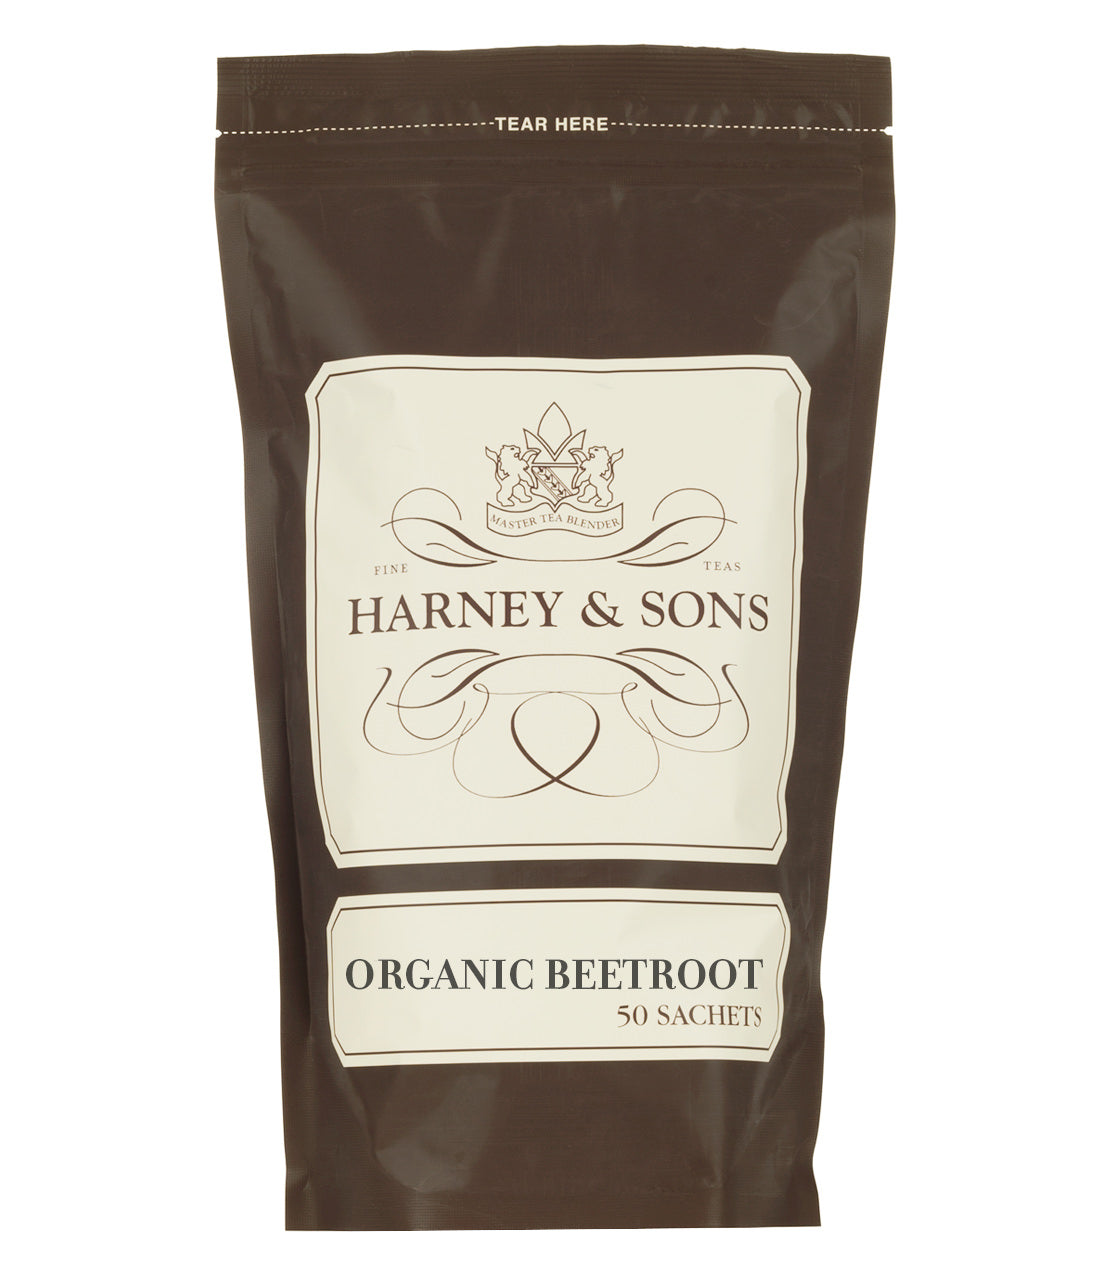 Organic Beetroot, Bag of 50 Sachets - Sachets Bag of 50 Sachets - Harney & Sons Fine Teas